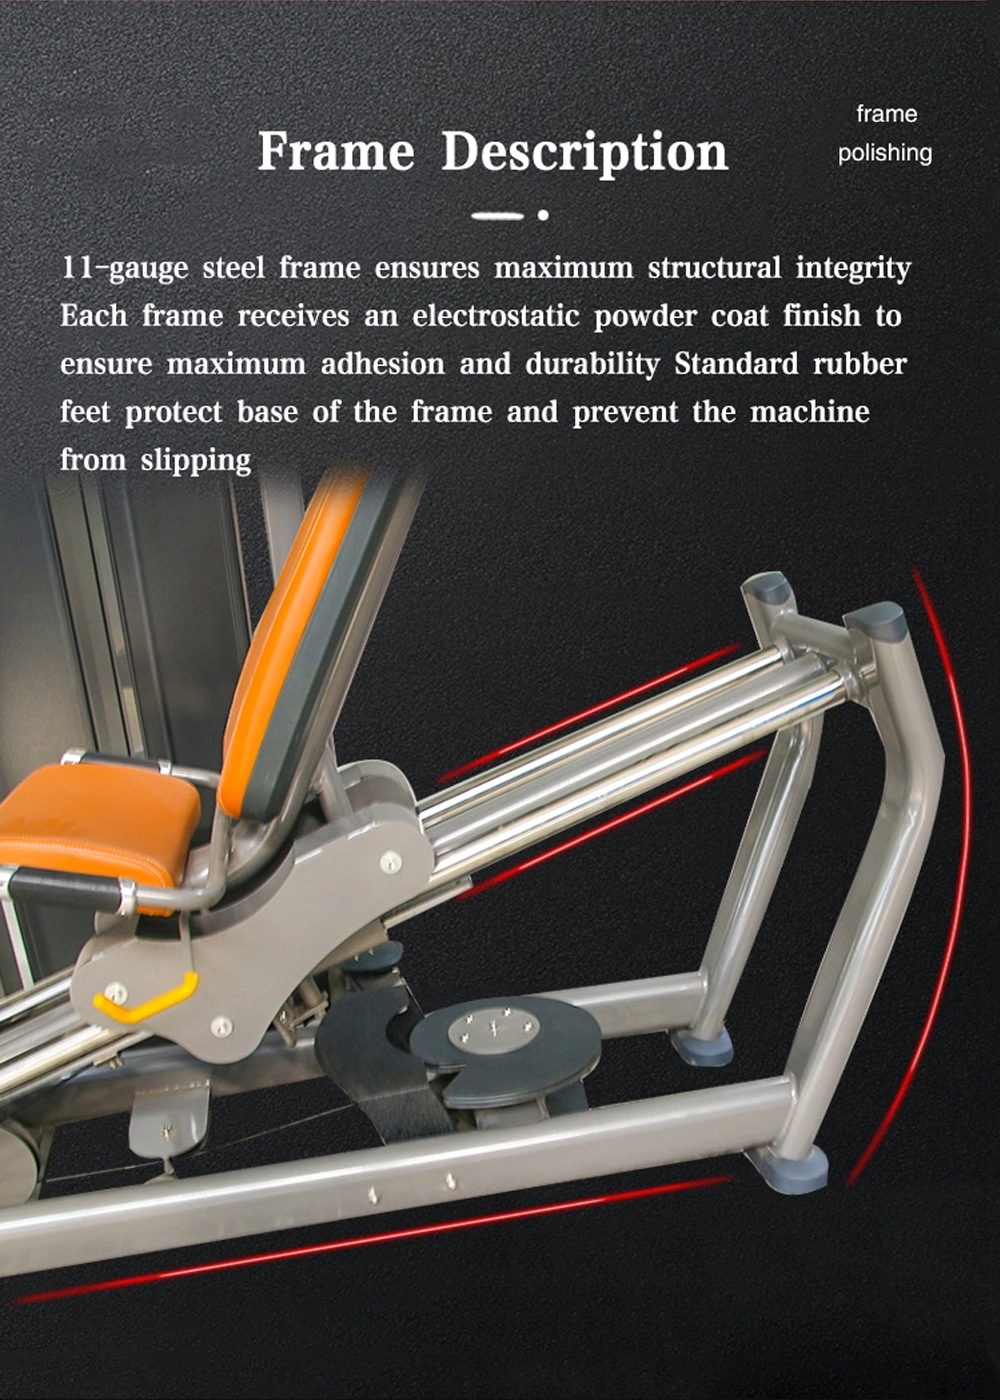 Strength Fitness Equipment of Seated Leg Press (xf08)